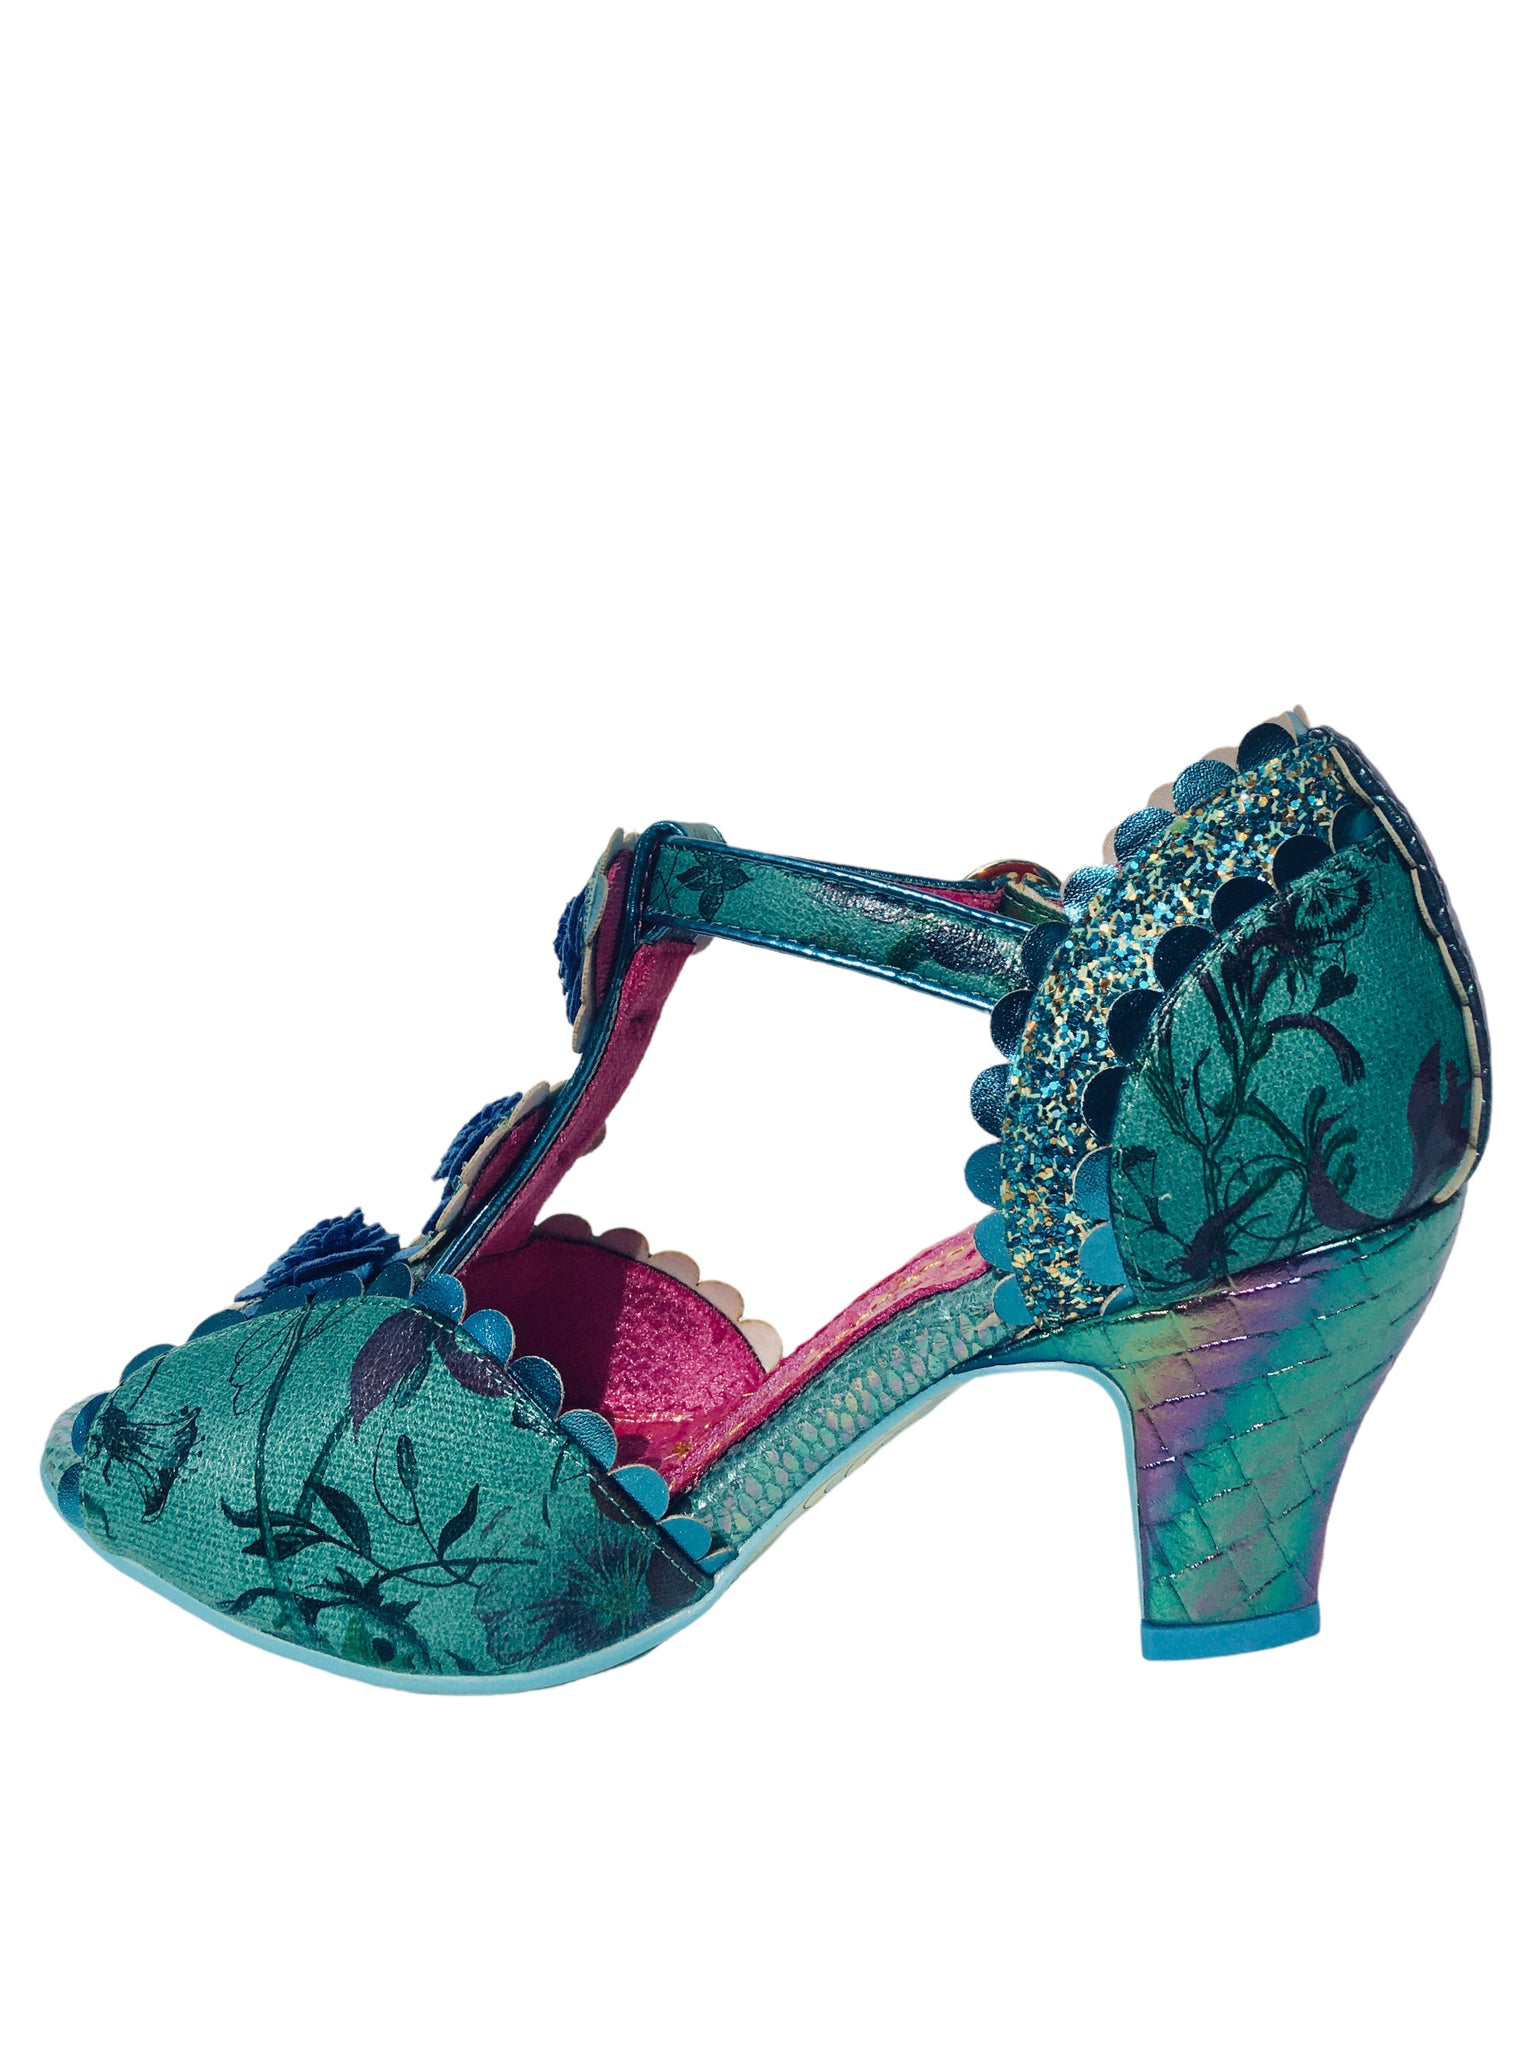 Buy Beautiful Irregular Choice Vintage Style Turquoise & Gold Double Toe  Shoes, Size 38/UK 5 Online in India 